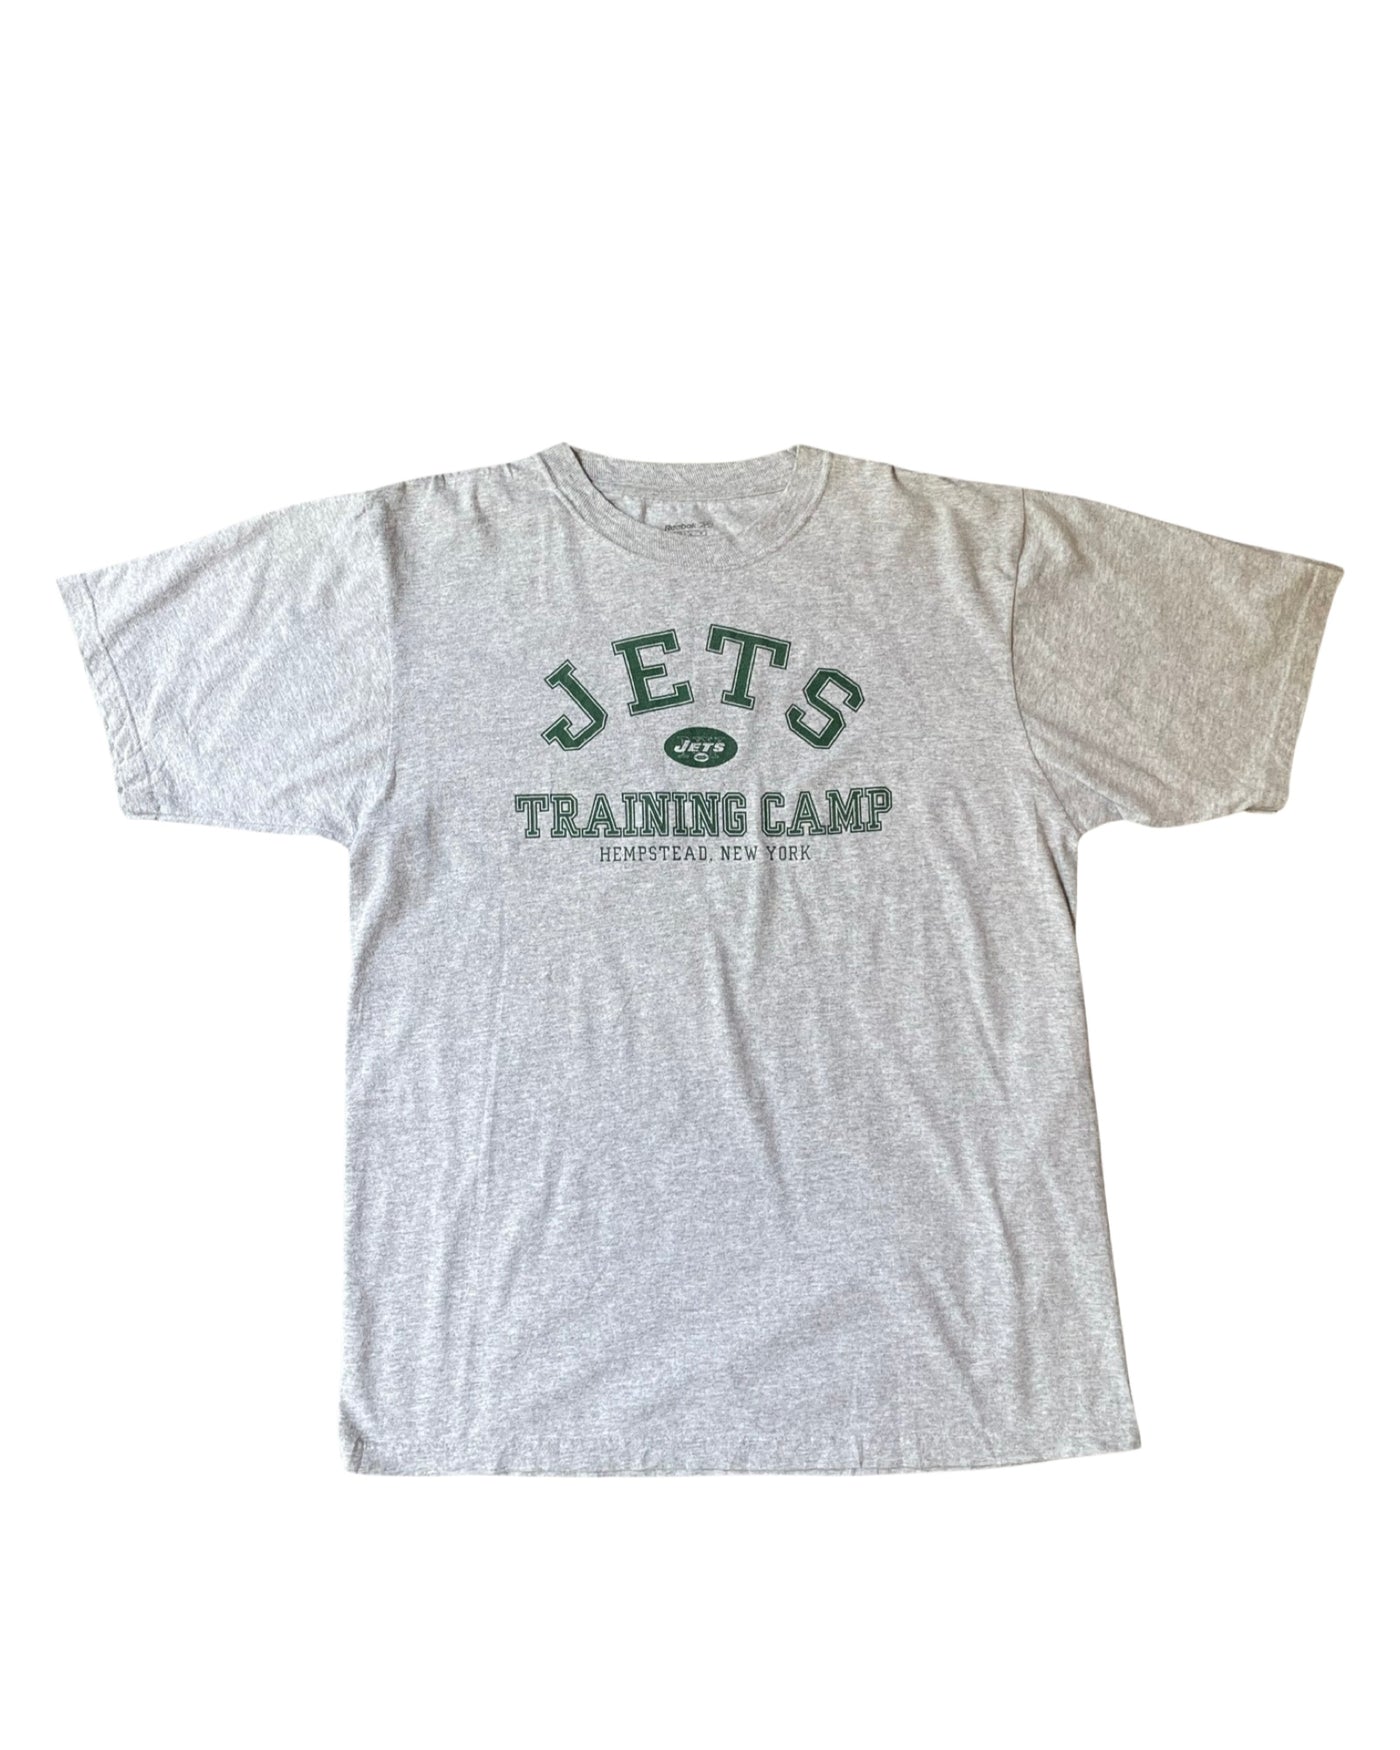 Vintage NFL New York Jets T-Shirt Size M